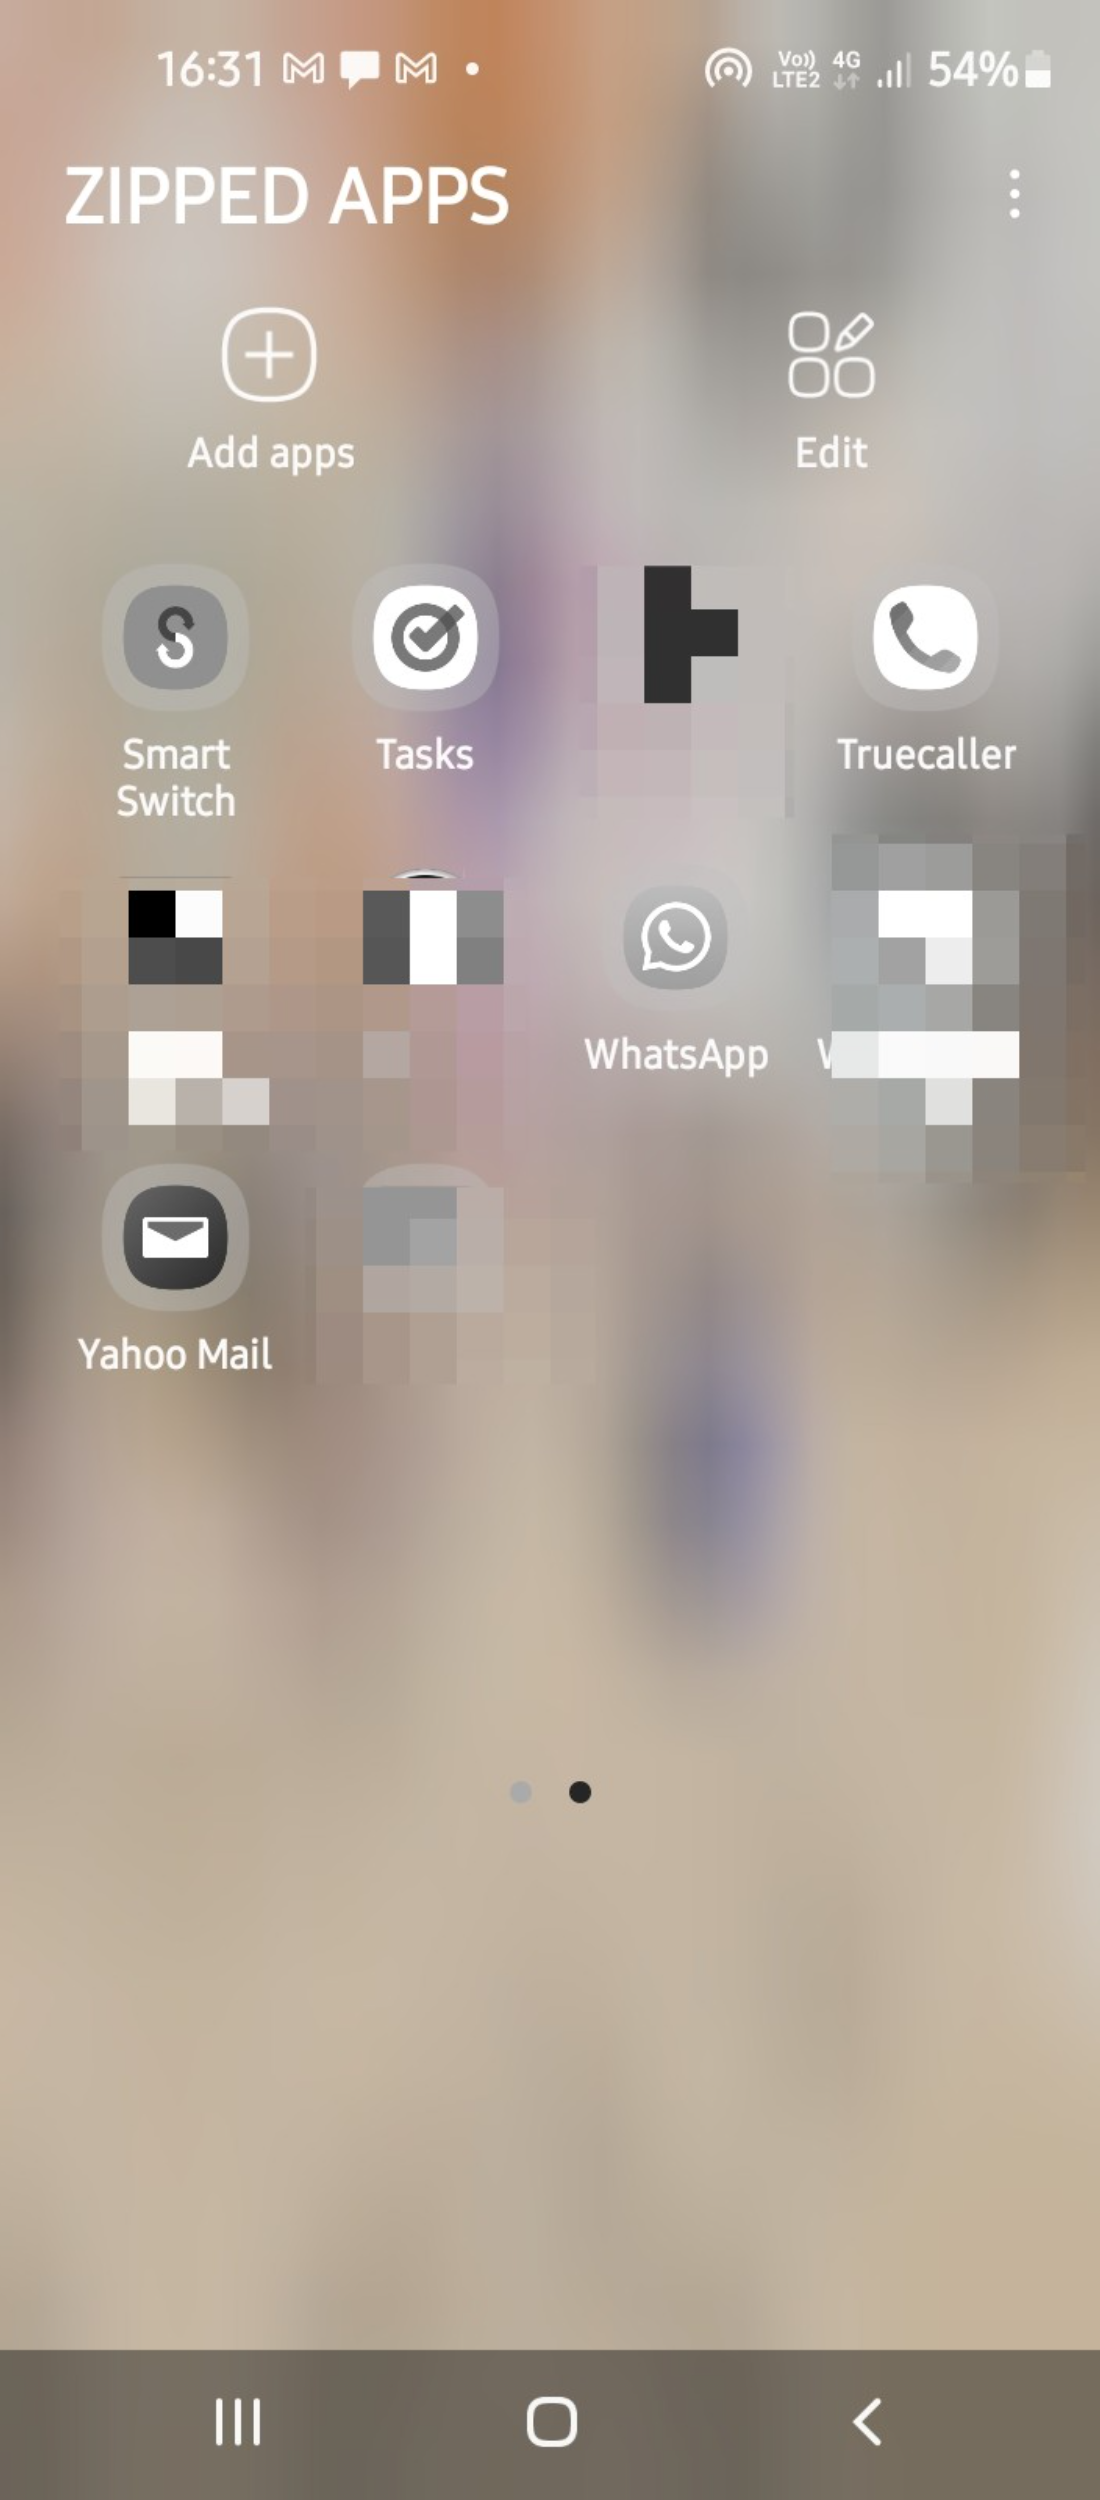 Zipped apps folder on samsung